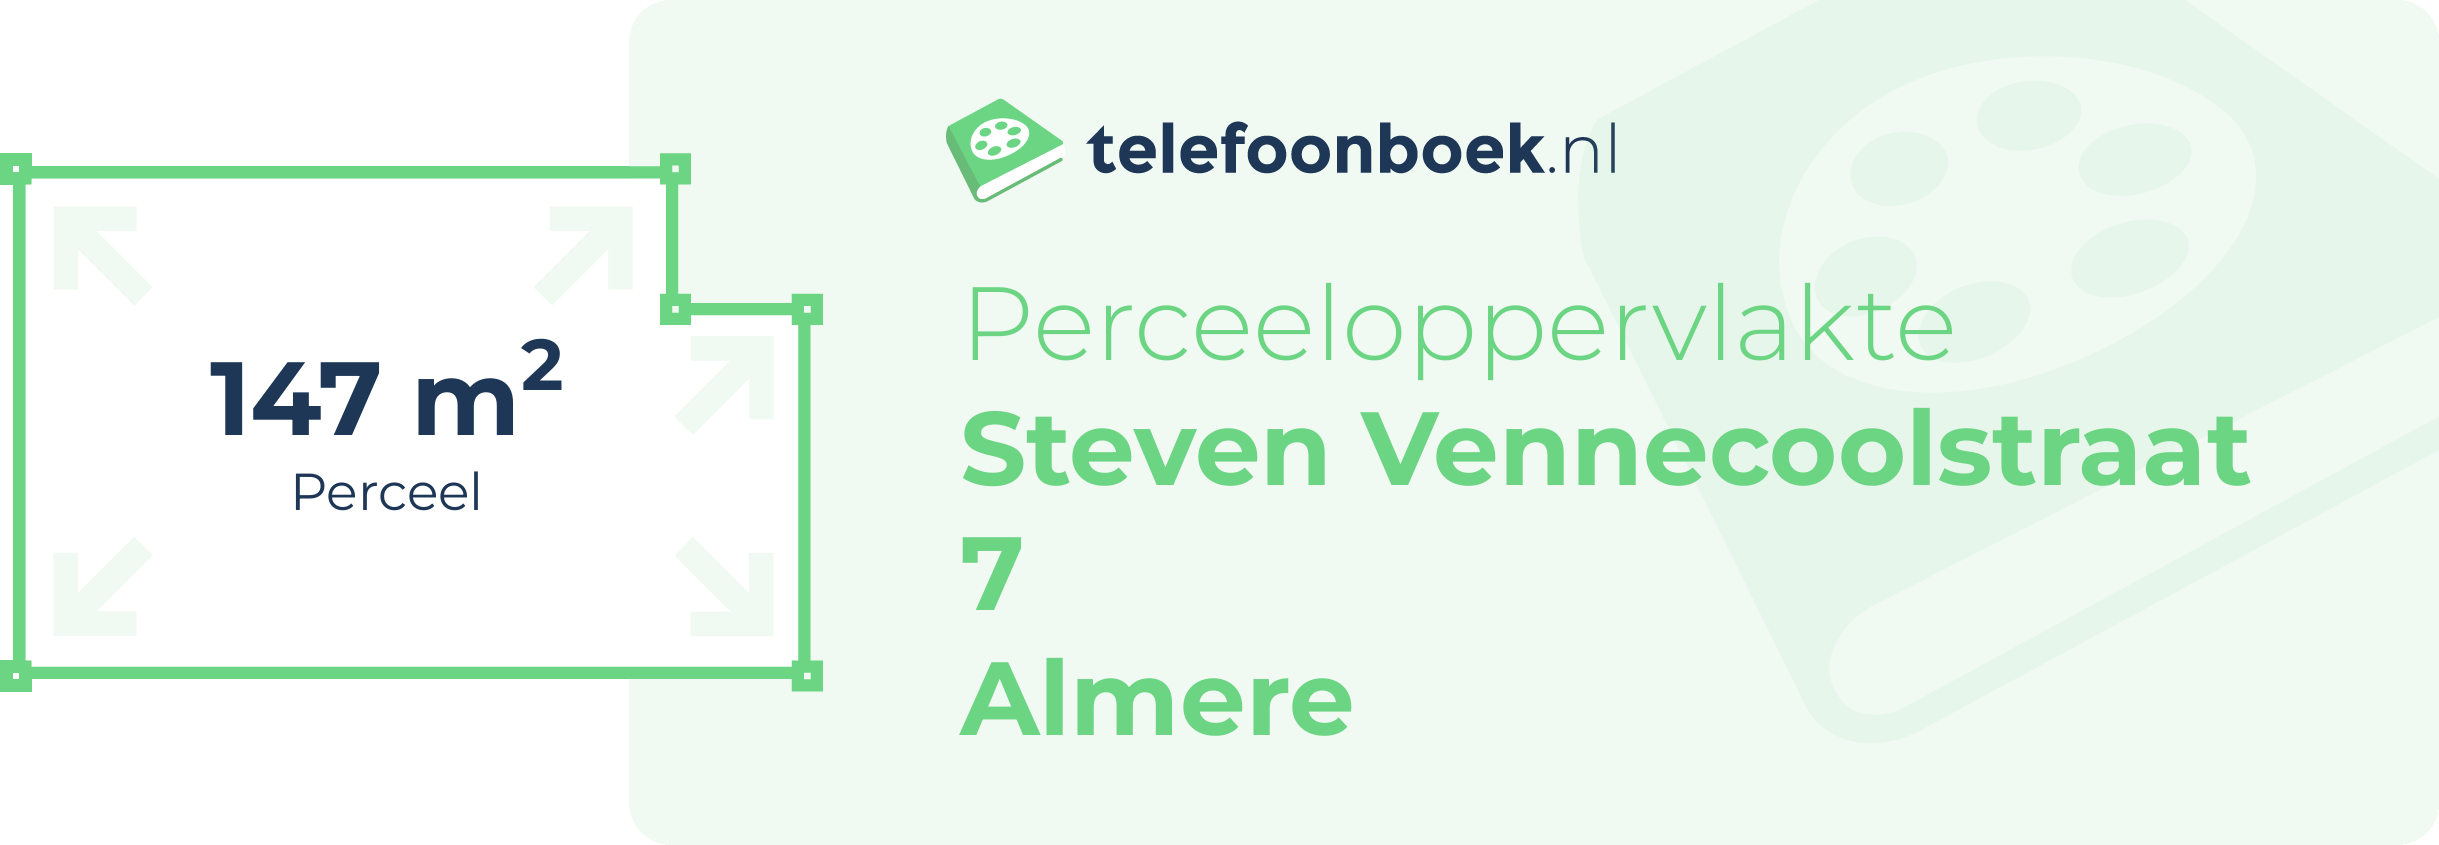 Perceeloppervlakte Steven Vennecoolstraat 7 Almere